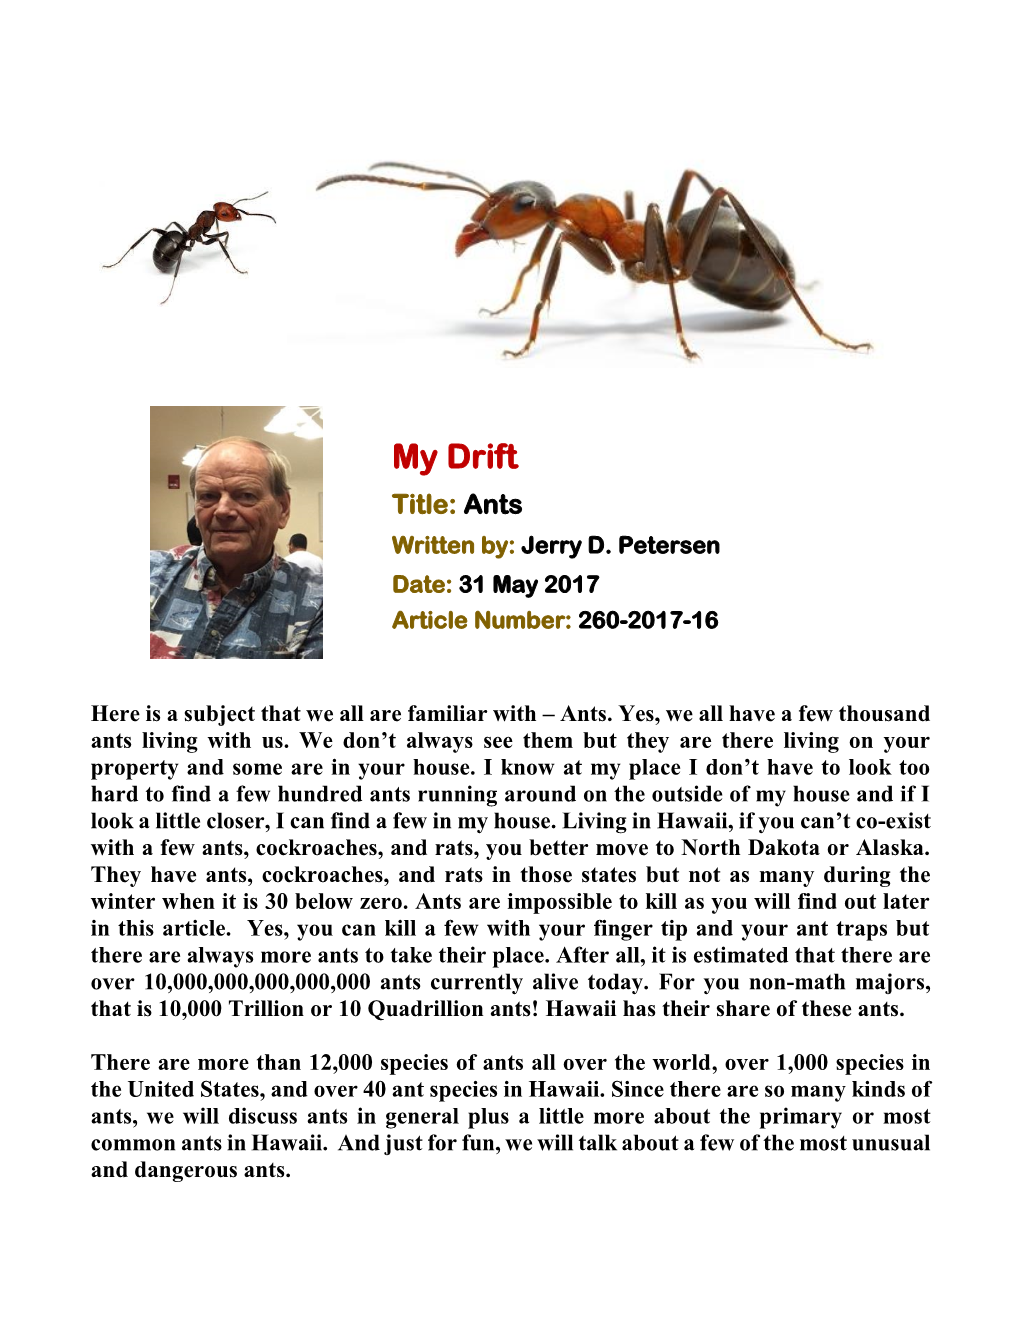 My Drift Title: Ants Written By: Jerry D